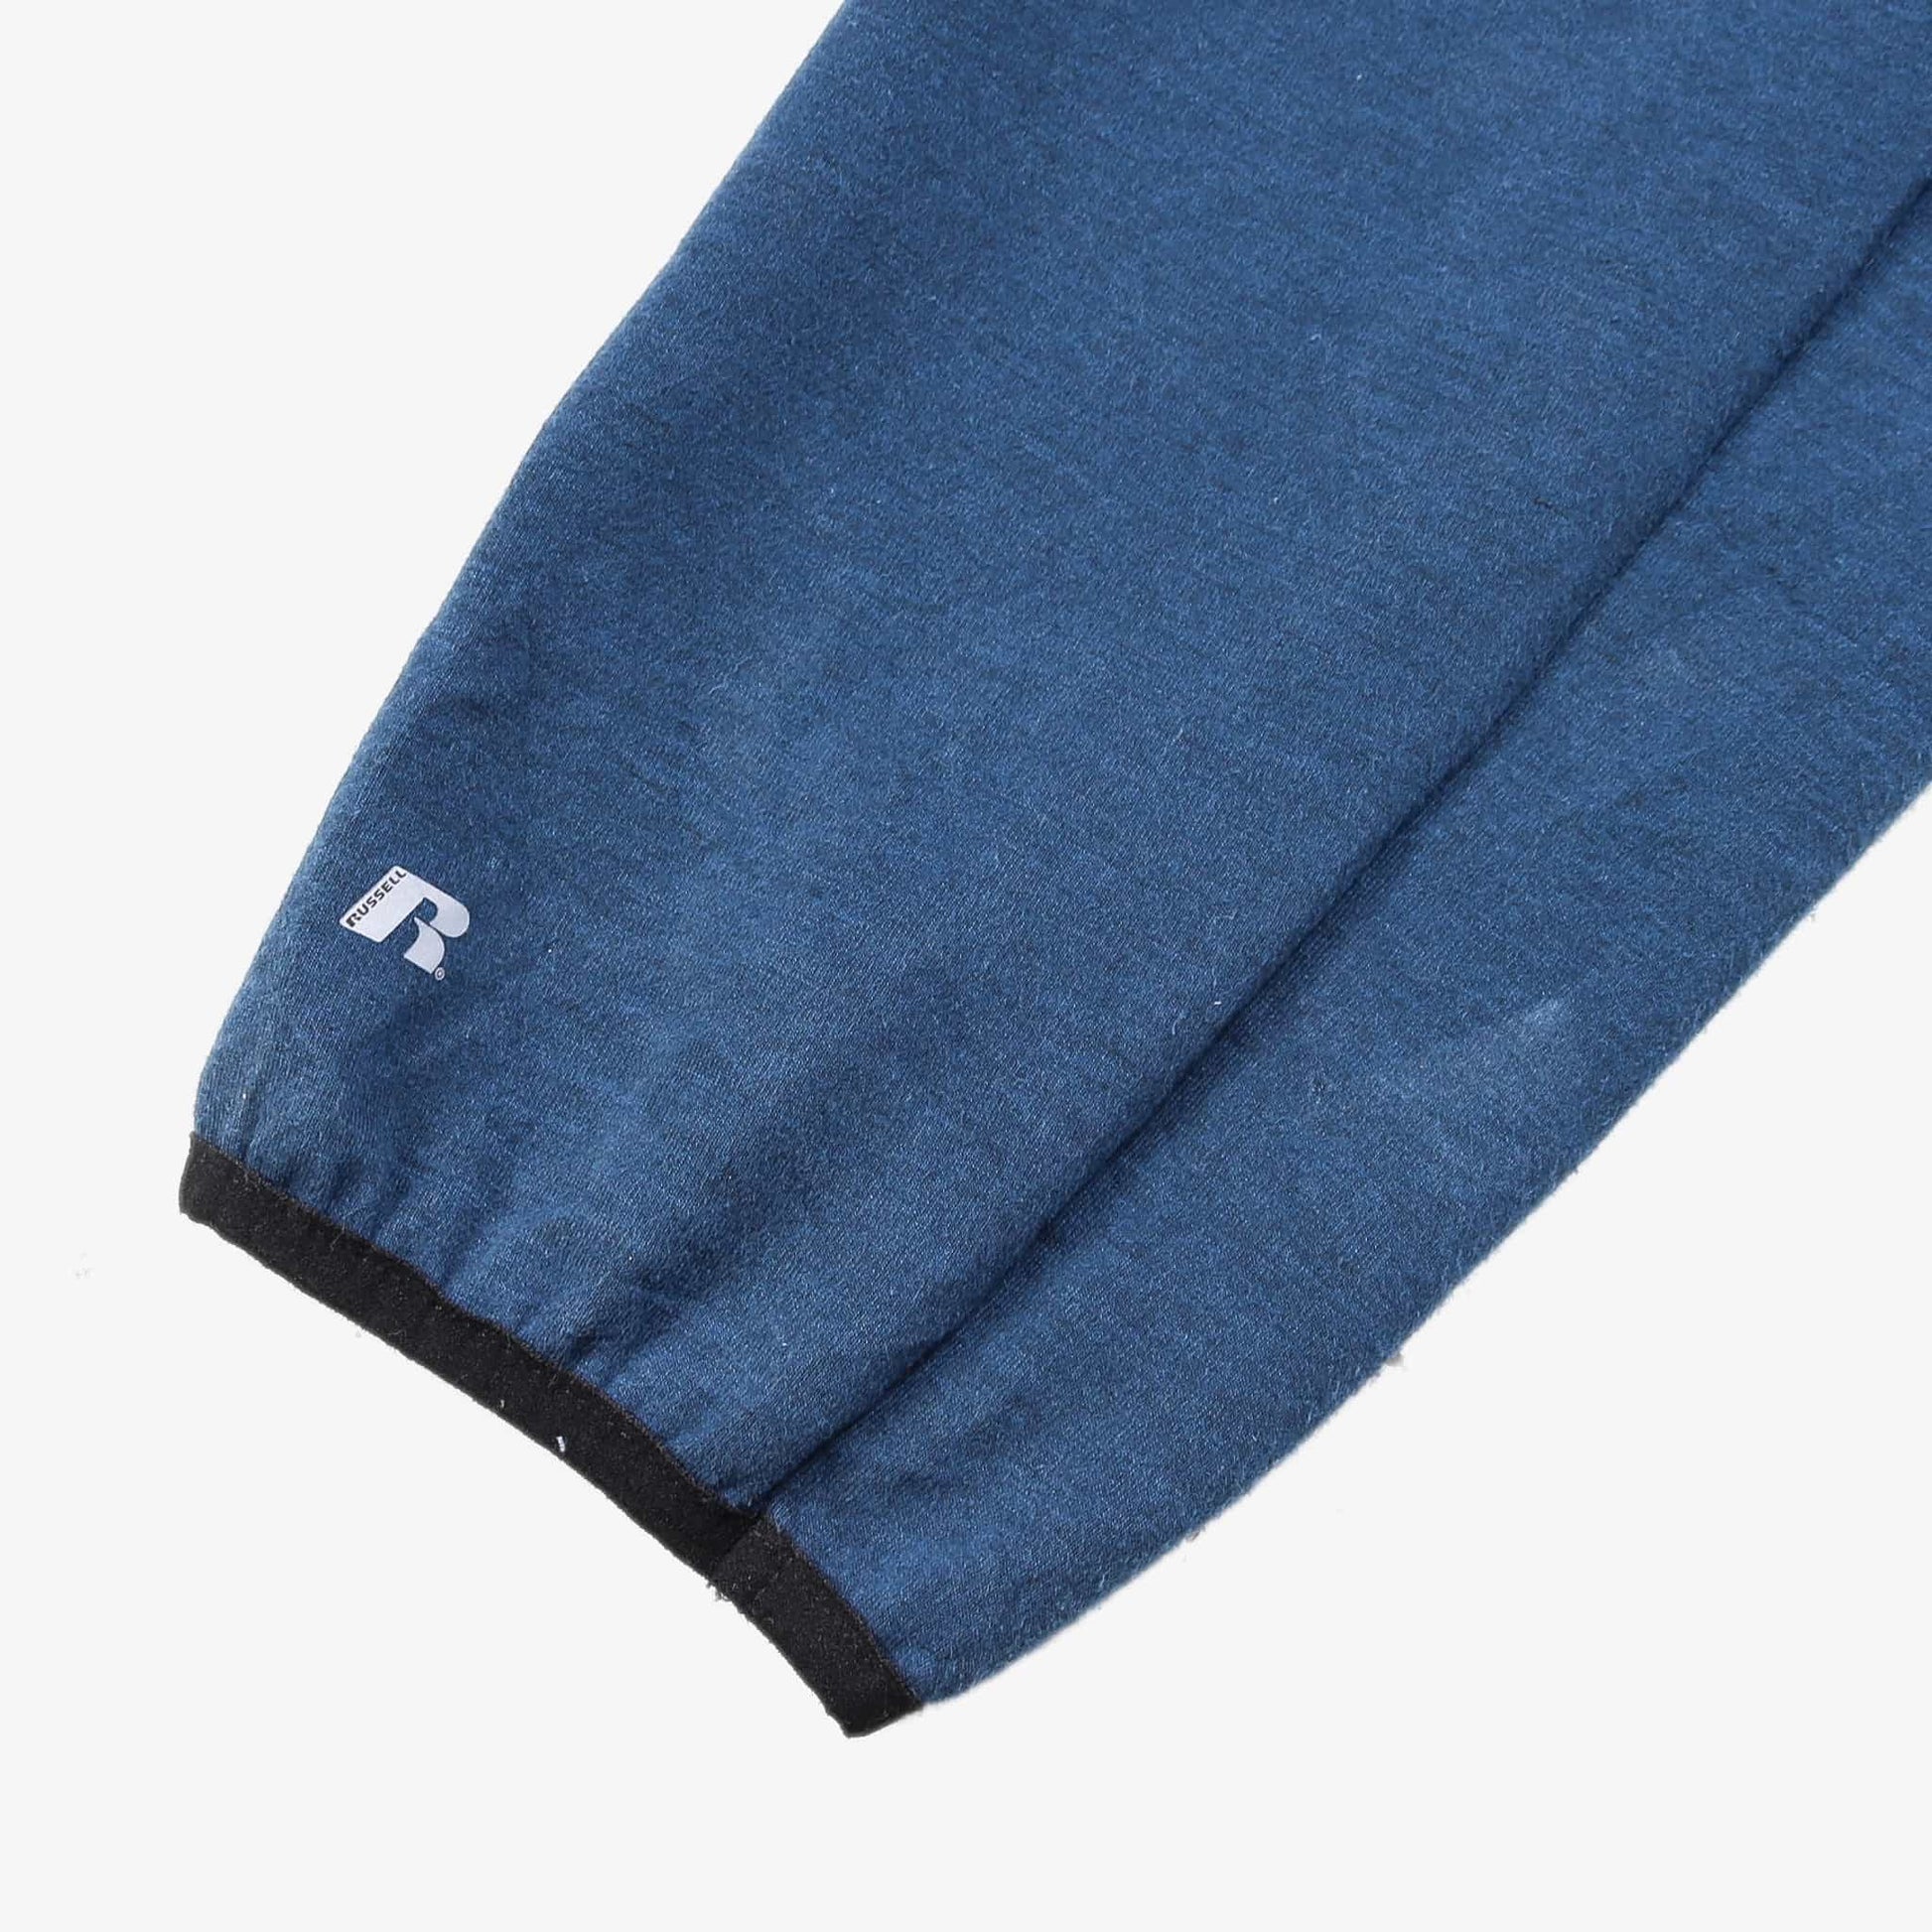 Vintage Zipped Sweatshirt - Navy - American Madness